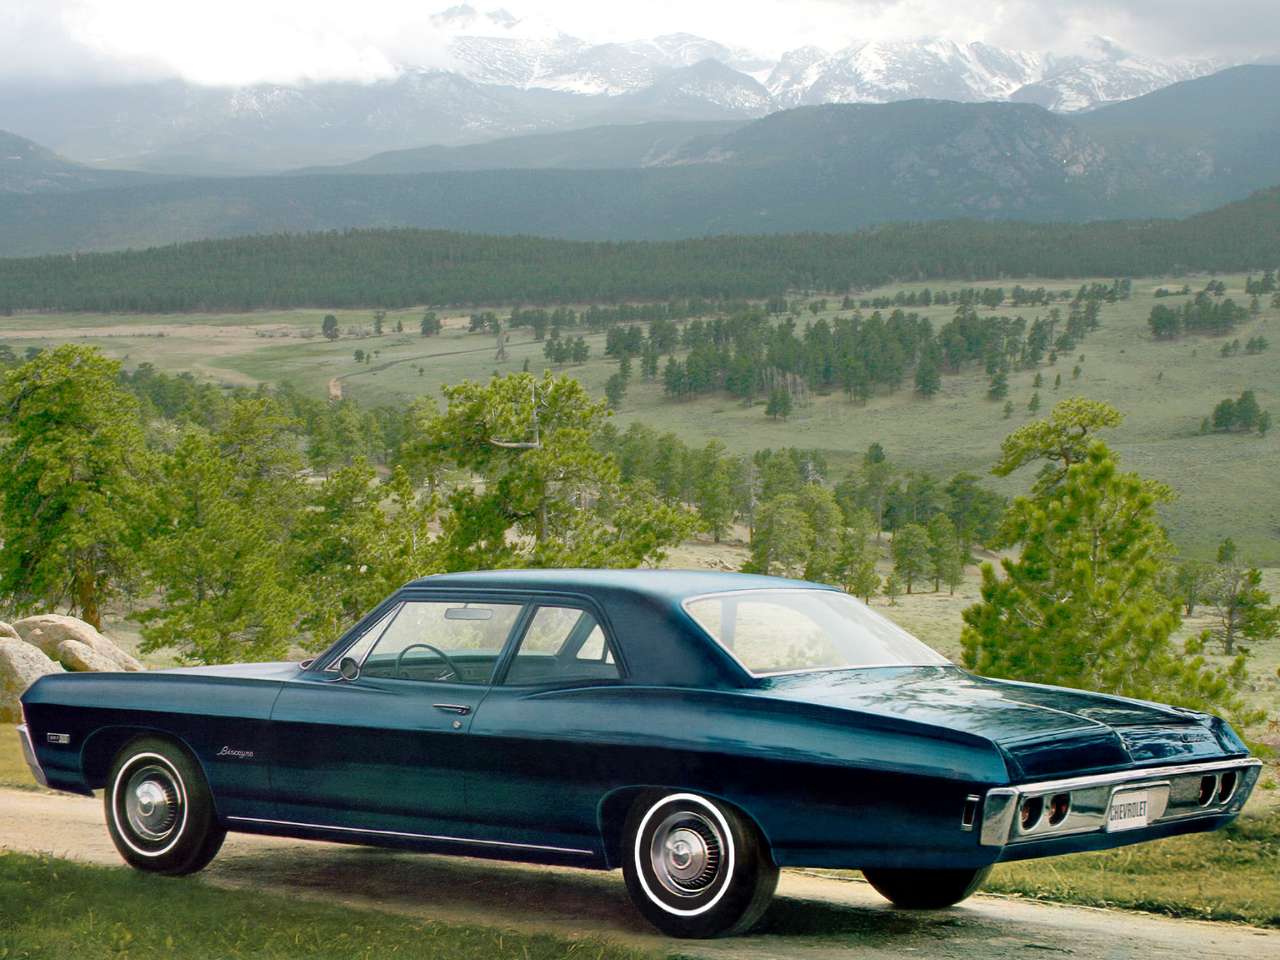 1968 Chevrolet Biscayne 2-dveřní sedan skládačky online